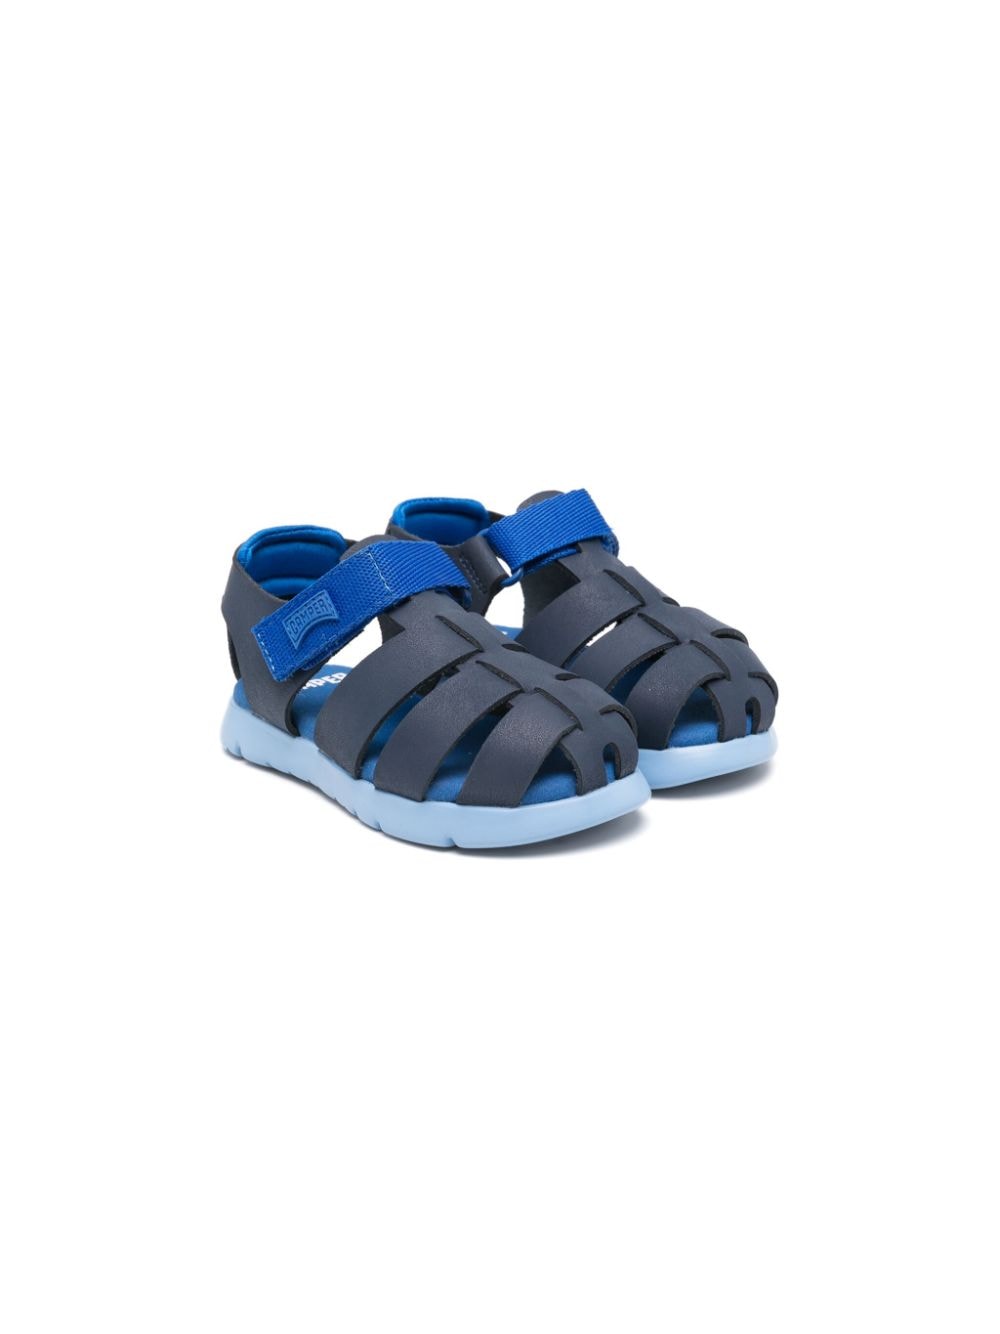 Camper Kids Oruga leather sandals - Blue von Camper Kids